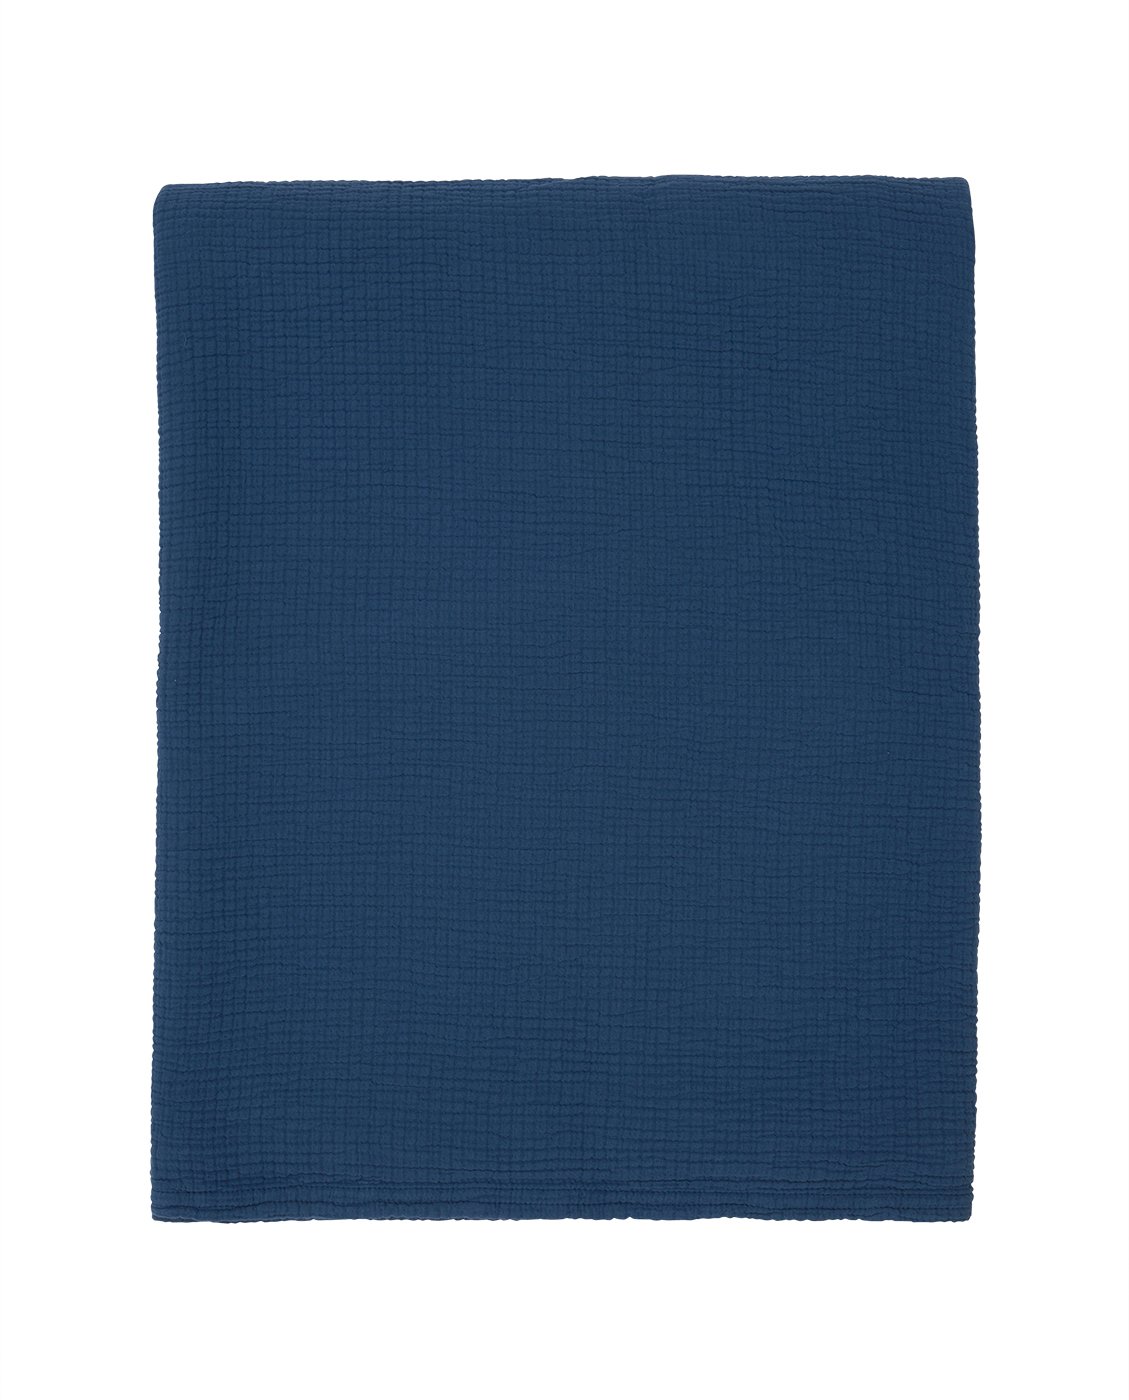 Bedspread 160x240 blue